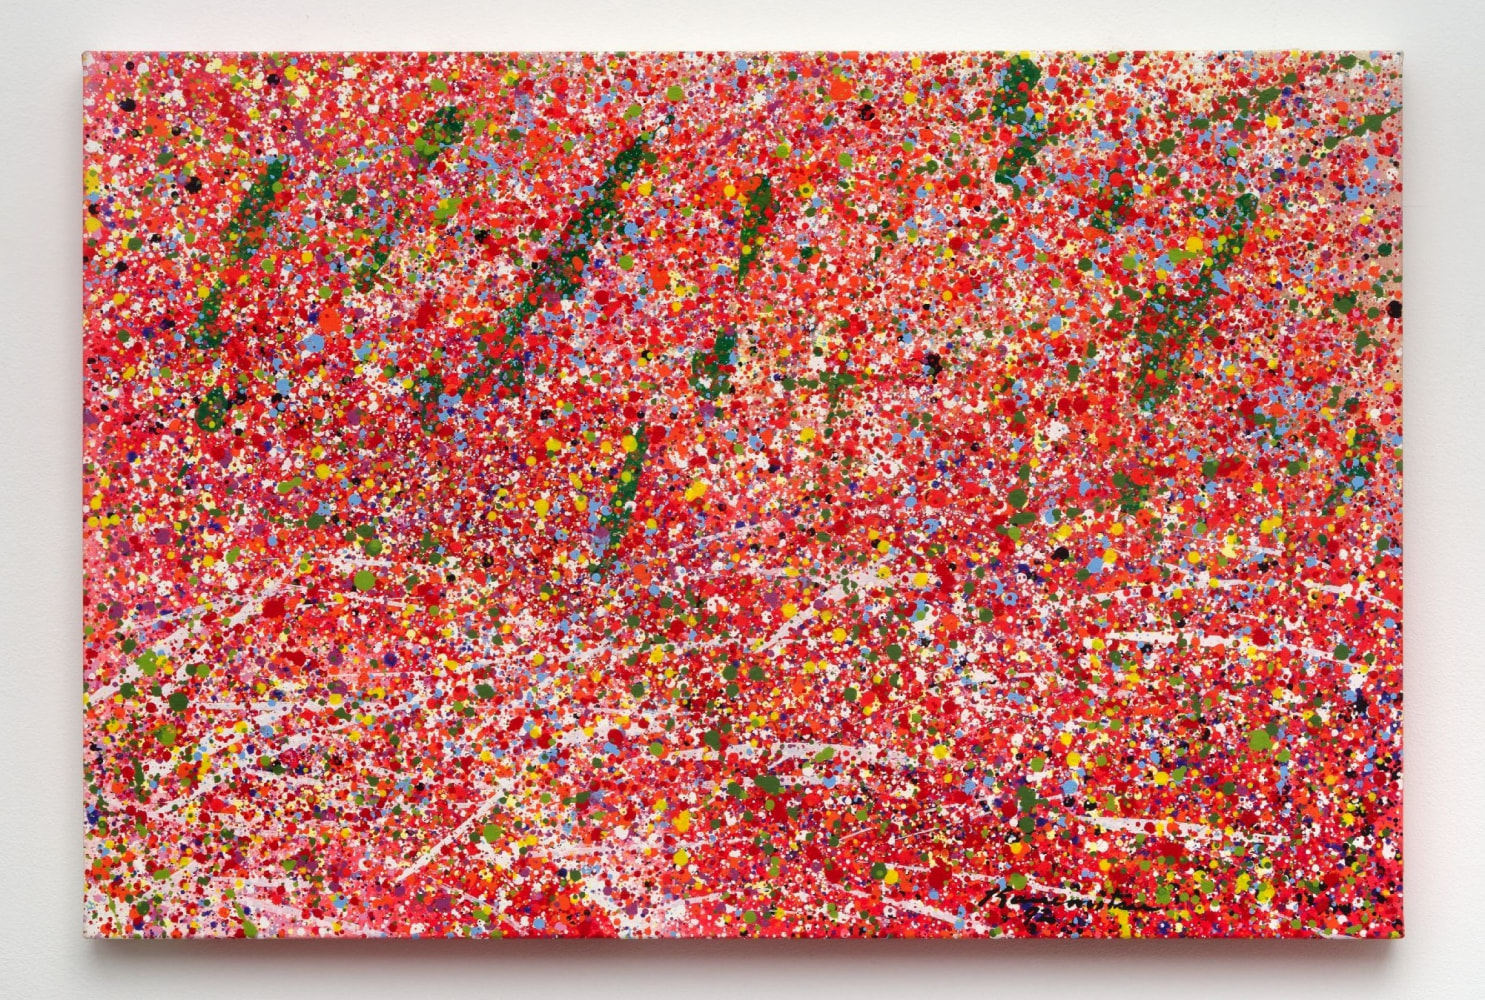 Matsumi Kanemitsu (1922-1992)
Untitled (K), 1992&amp;nbsp;&amp;nbsp;&amp;nbsp;&amp;nbsp;
acrylic on canvas
24 x 36 1/2 inches;&amp;nbsp;&amp;nbsp;61 x 92.7 centimeters
LSFA# 14000&amp;nbsp;